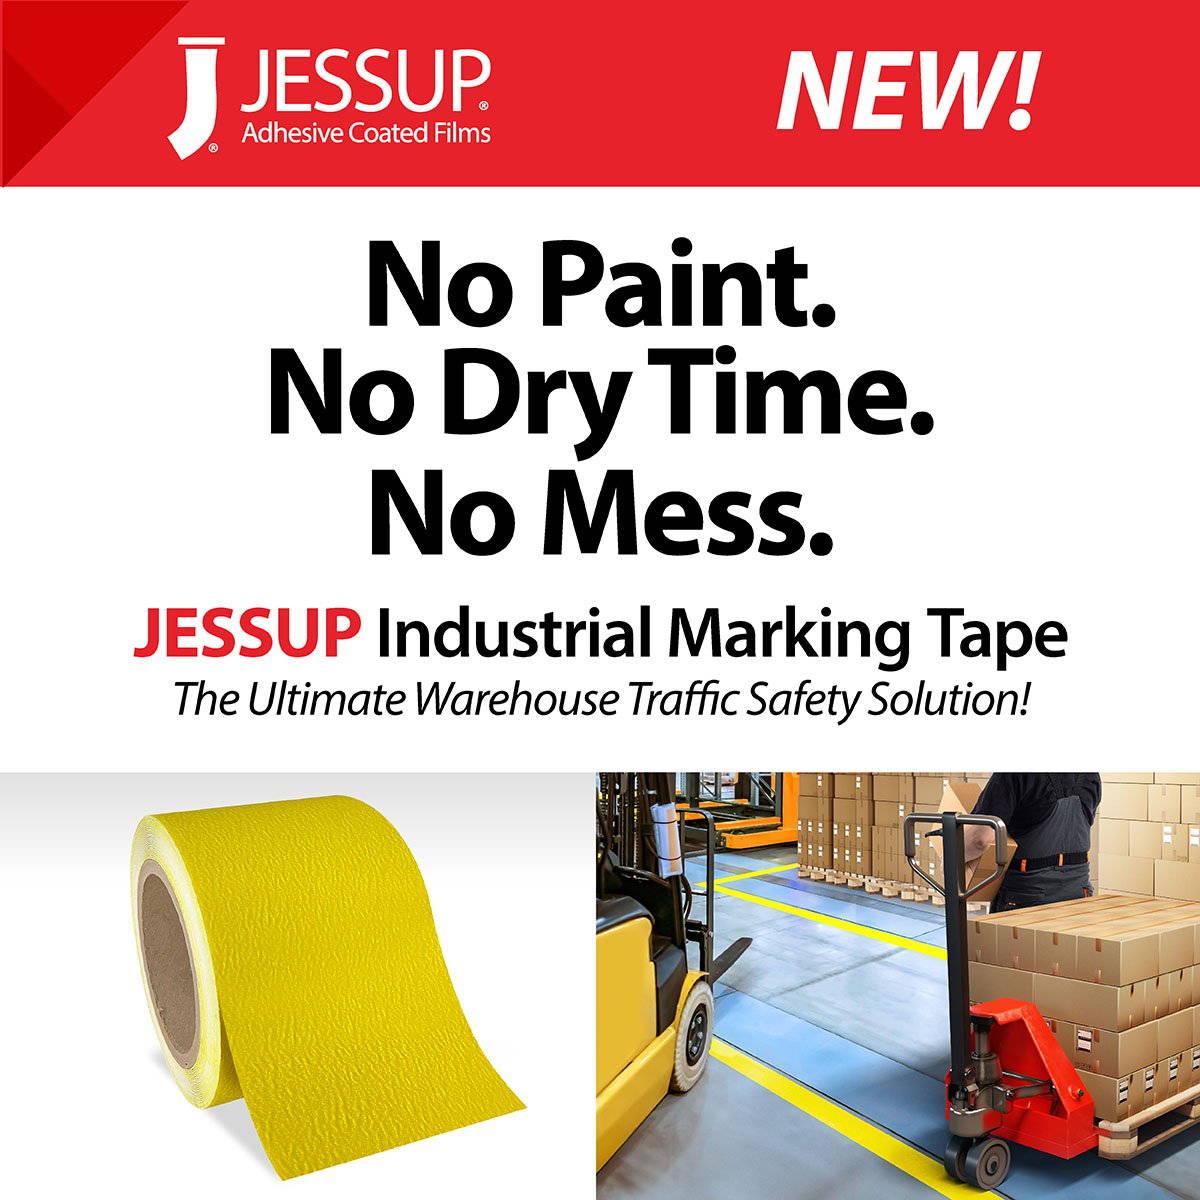 Jessup Industrial Marking Tape Warehouse Traffic